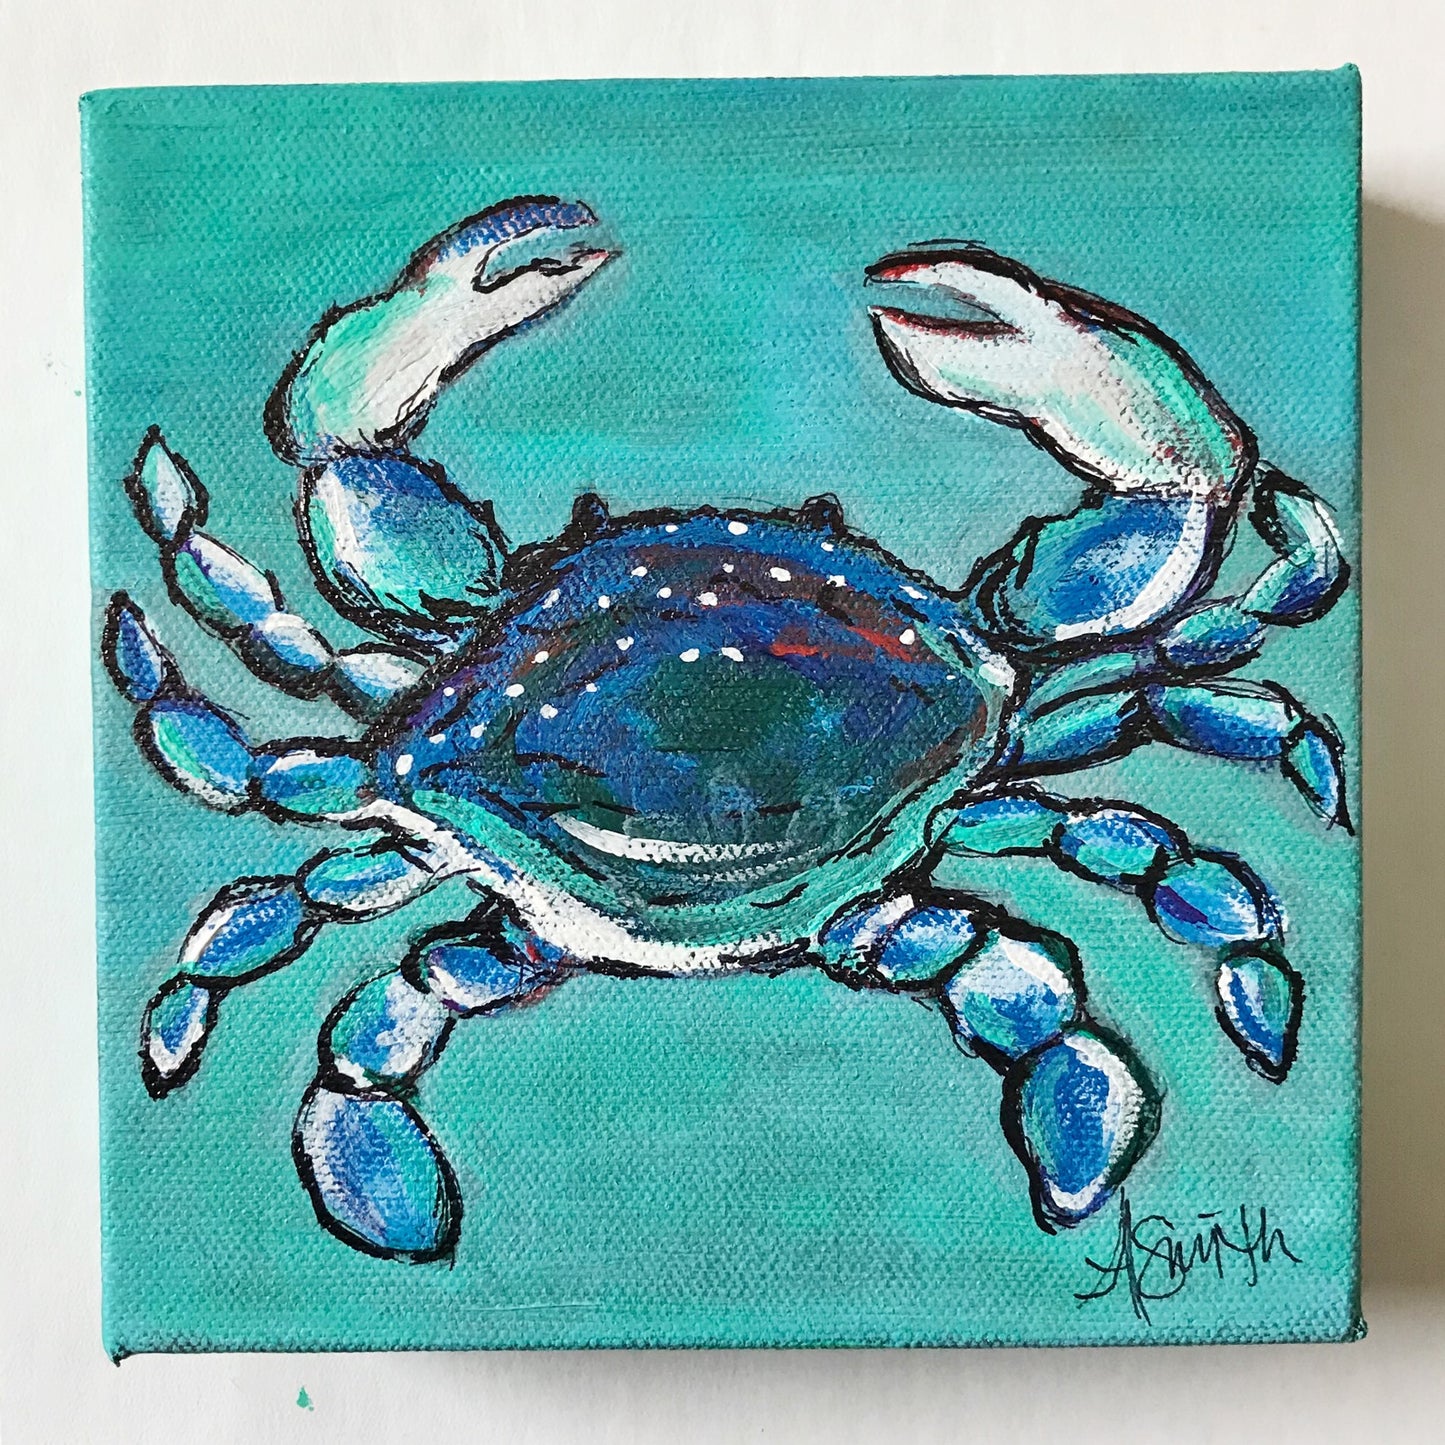 Little Crab, 6x6"